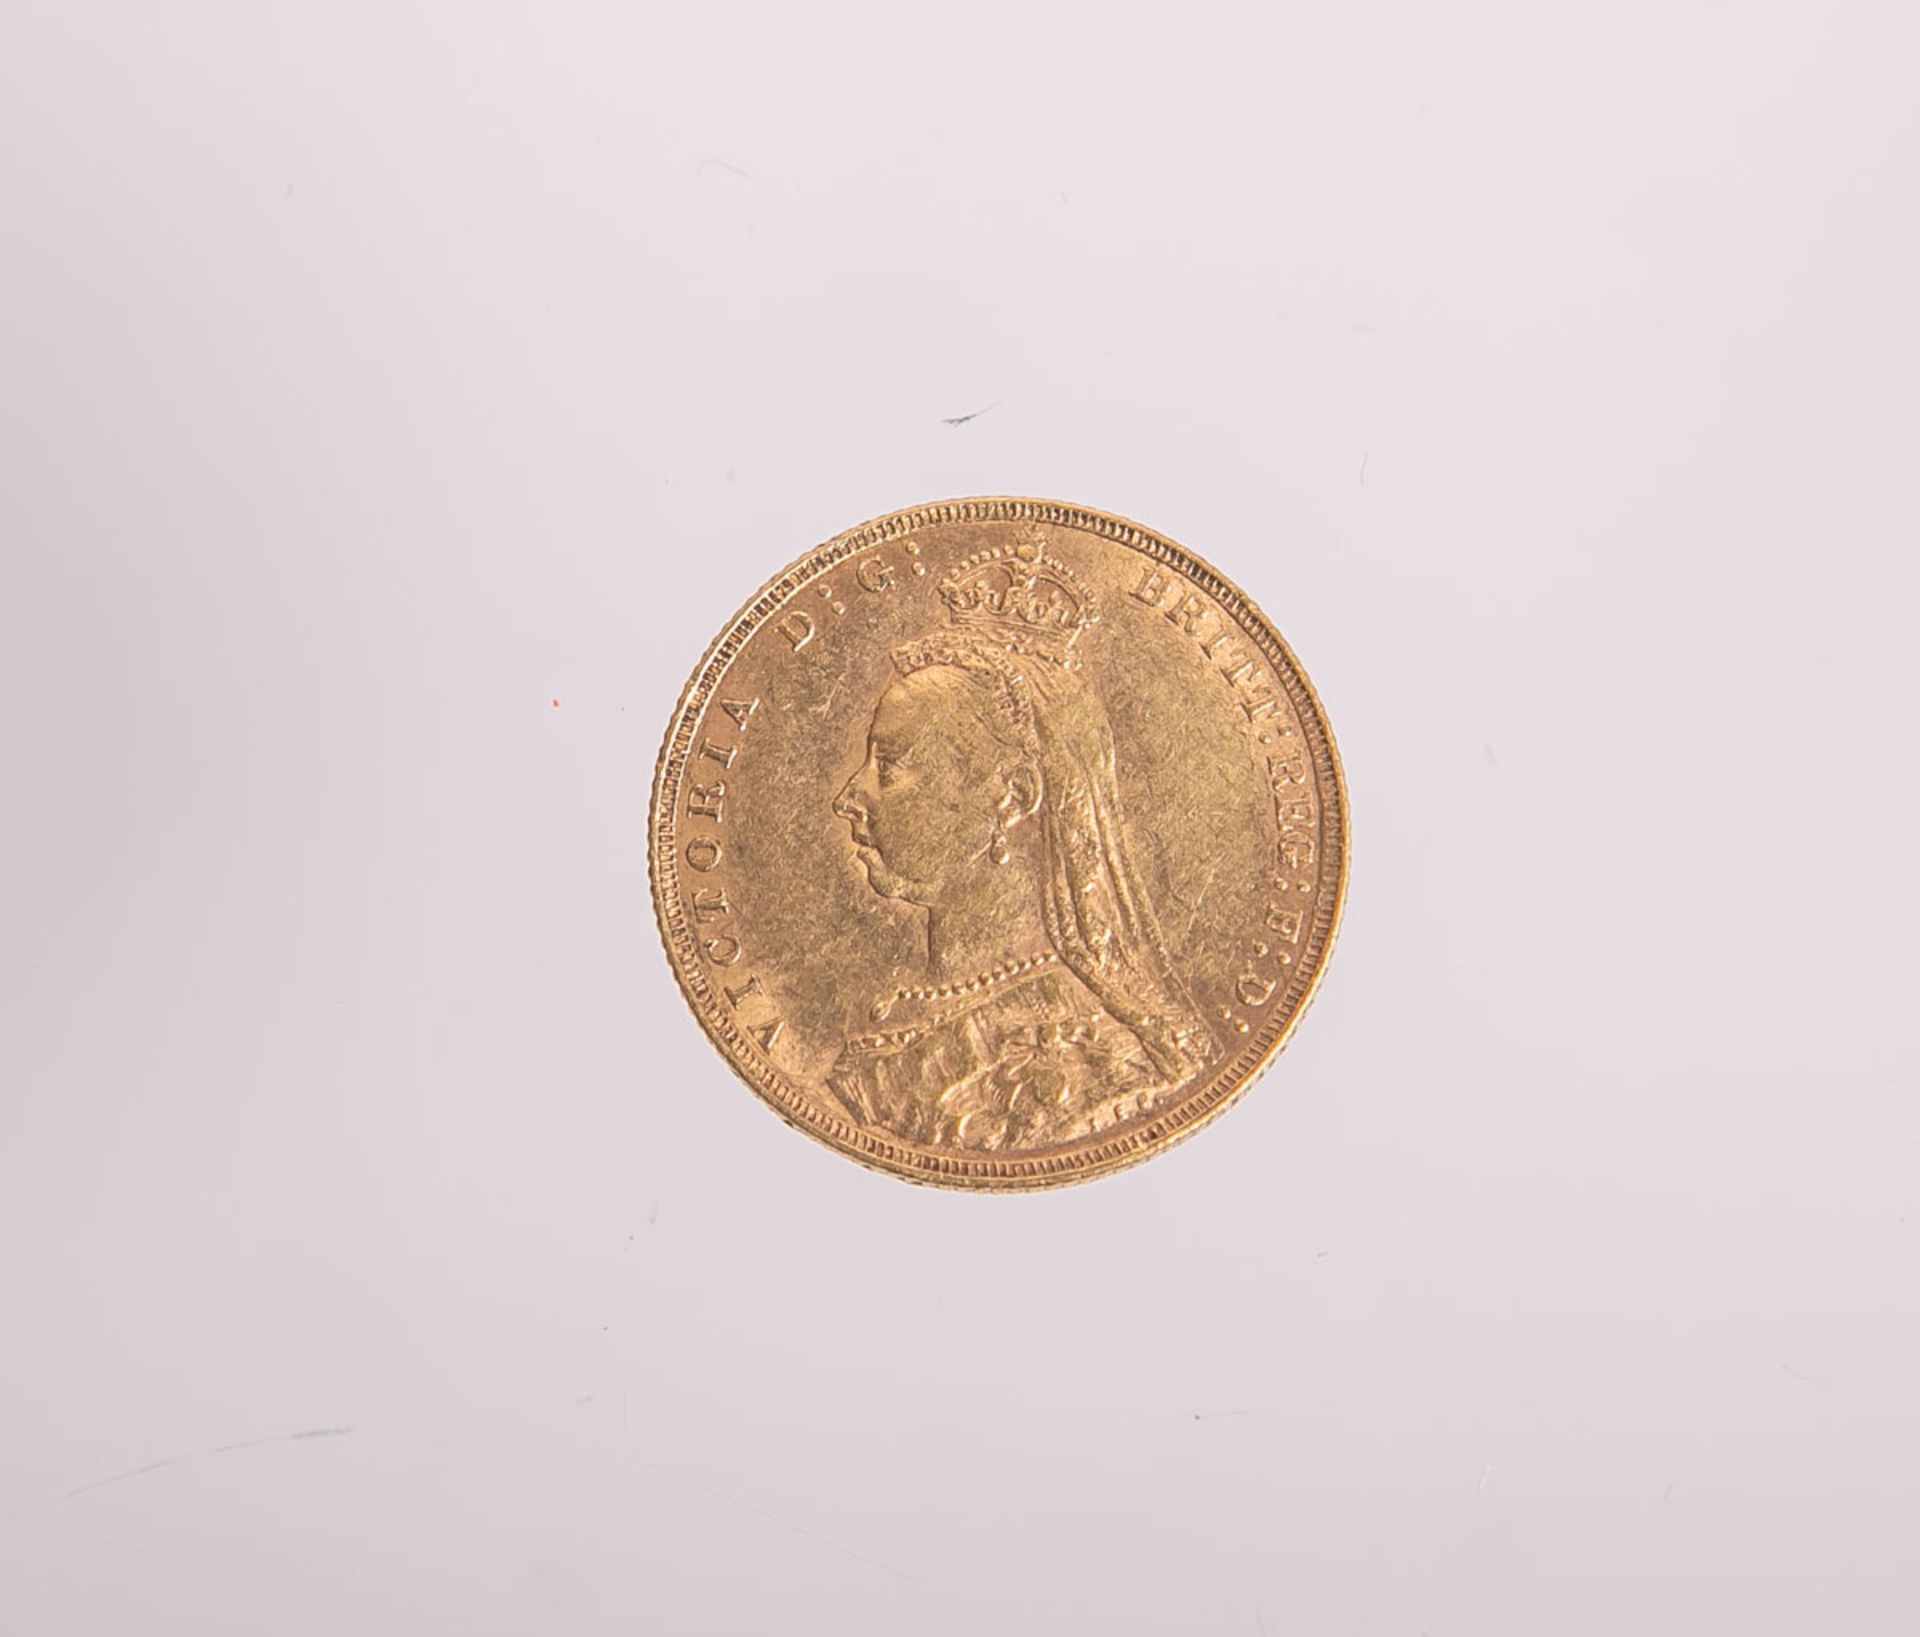 Goldmünze 1 Sovereign "Victoria" (England, 1891), Gewicht ca. 8 g. Ss.